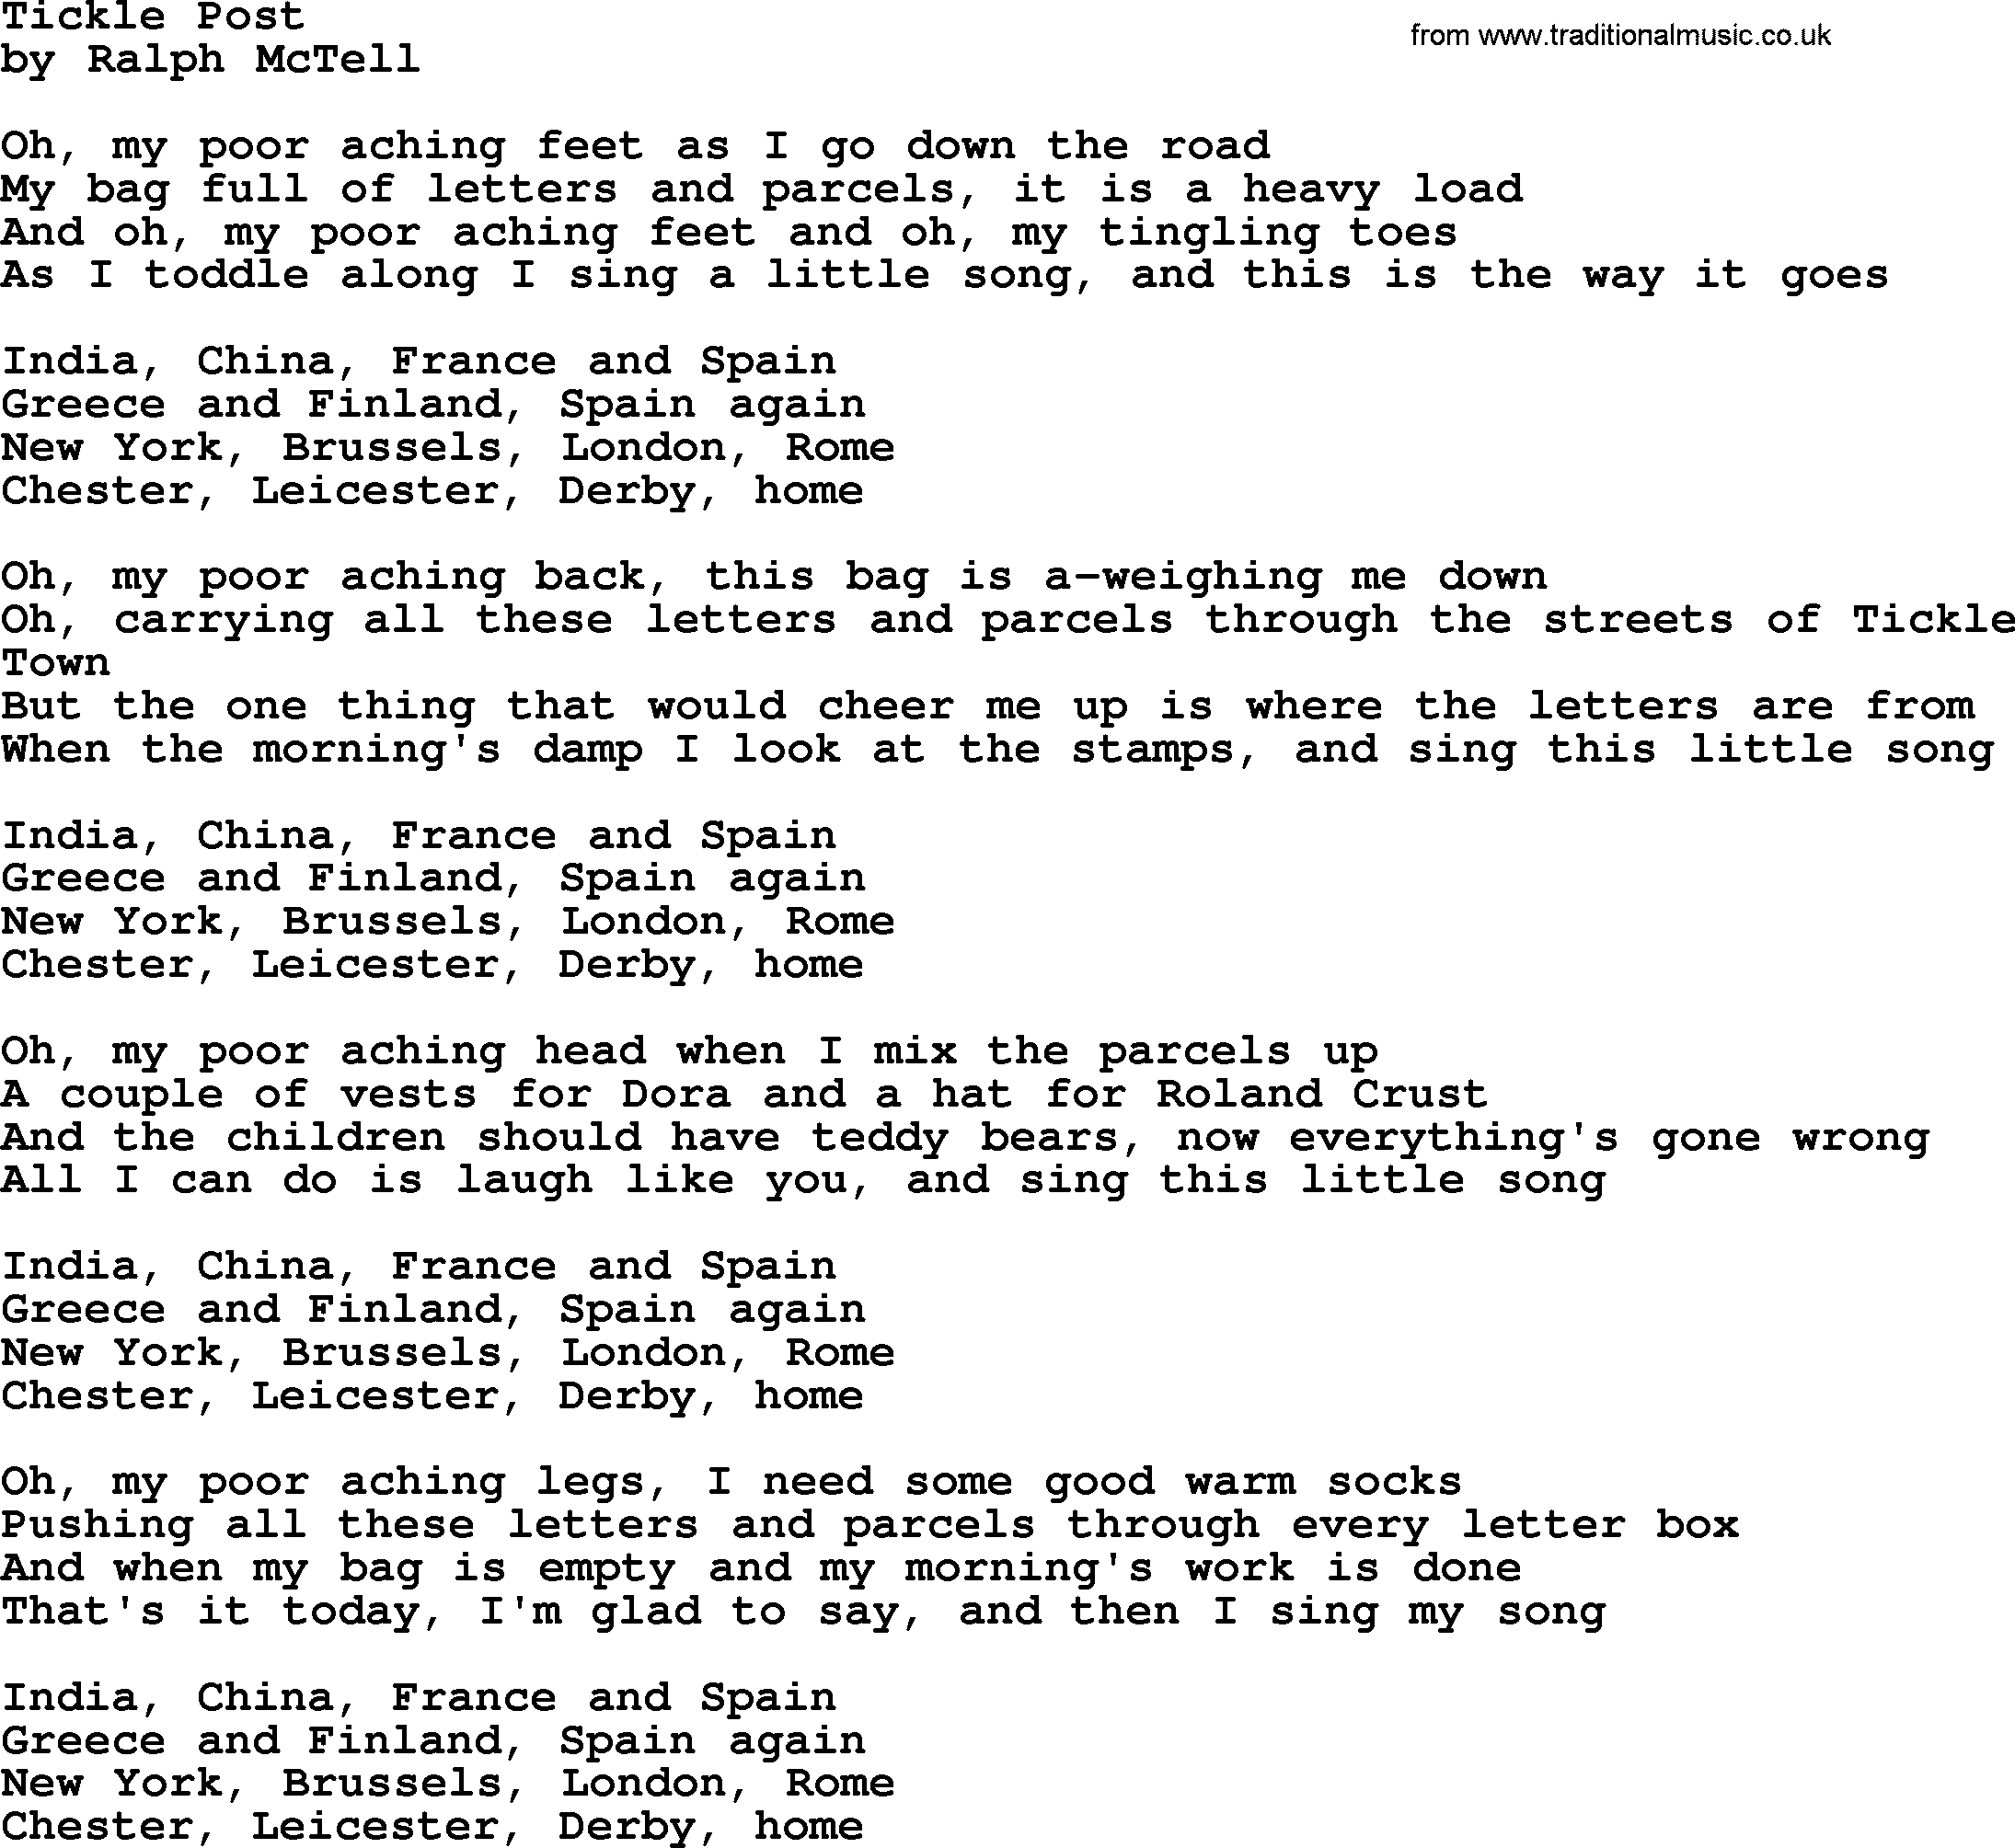 Ralph McTell Song: Tickle Post, lyrics